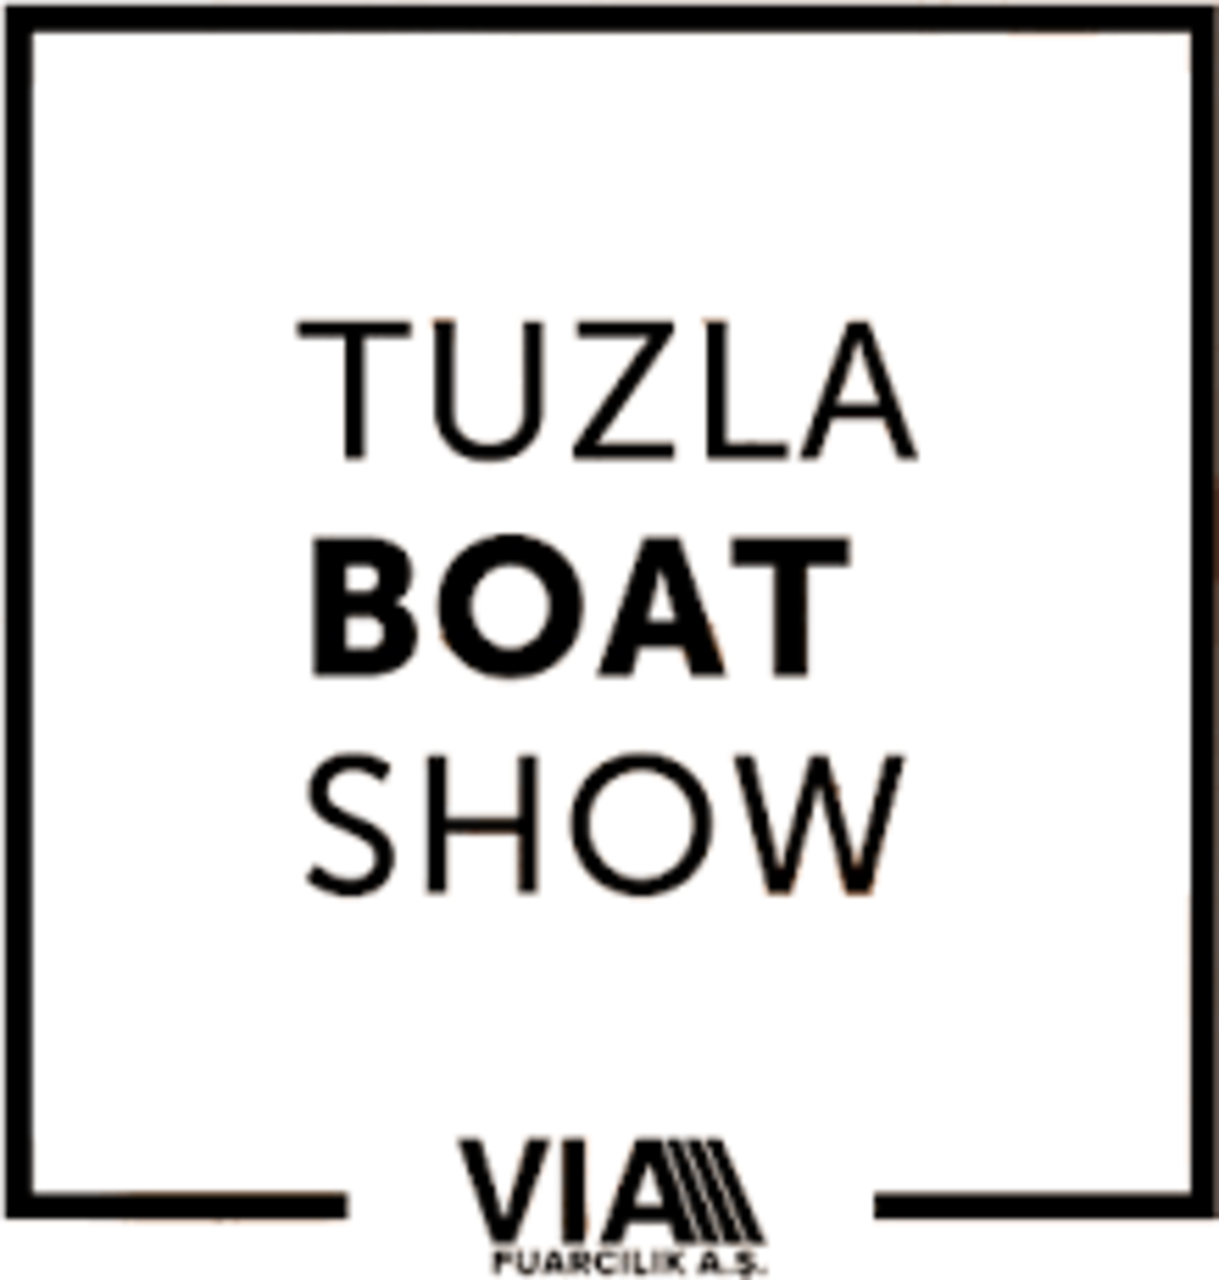 International Boat Show of Tuzla | Turkey